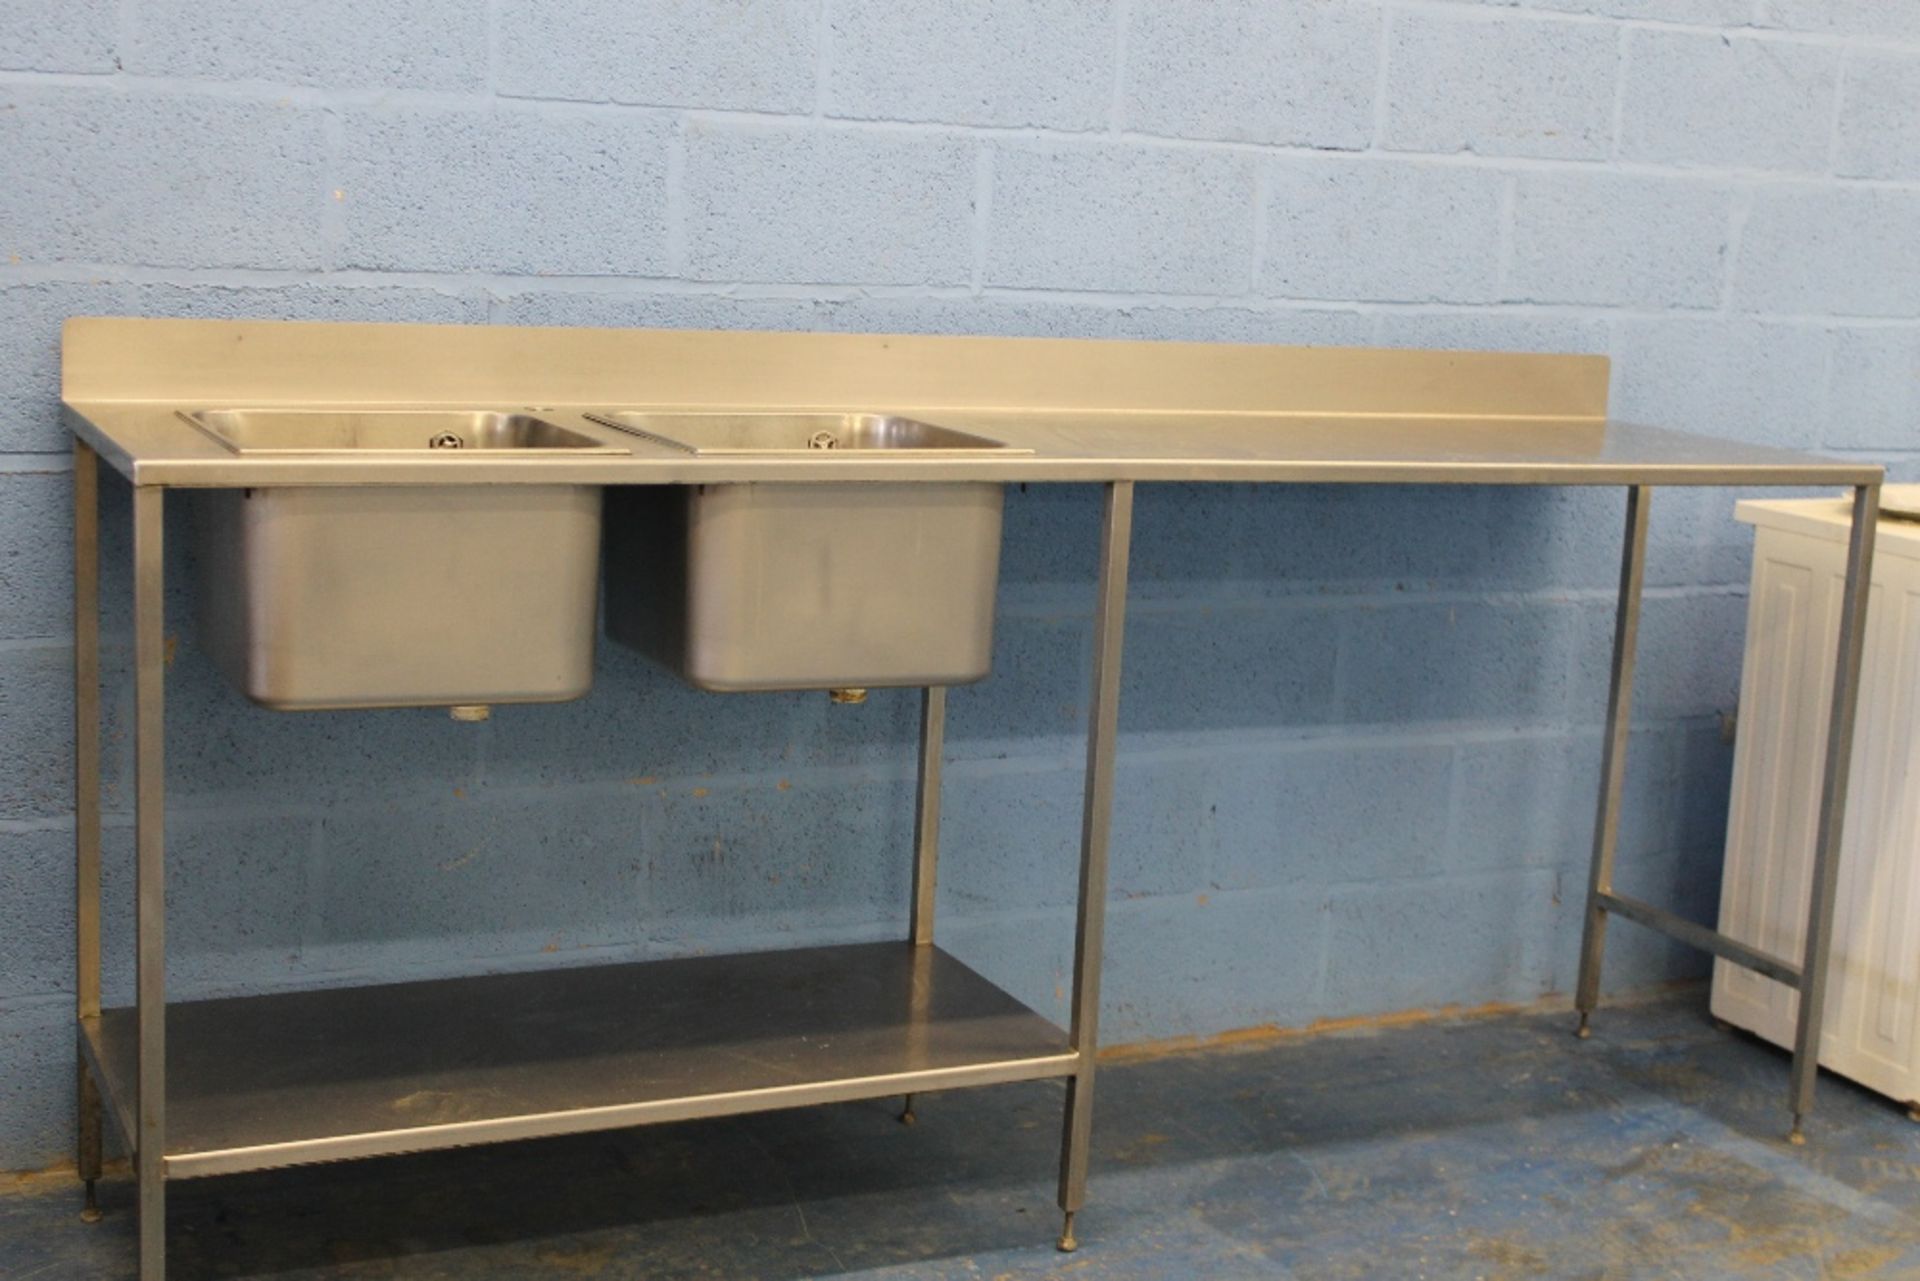 Stainless Steel Double Bowl Catering Sink – splash back -  NO VAT W230cm x H90cm x D60cm